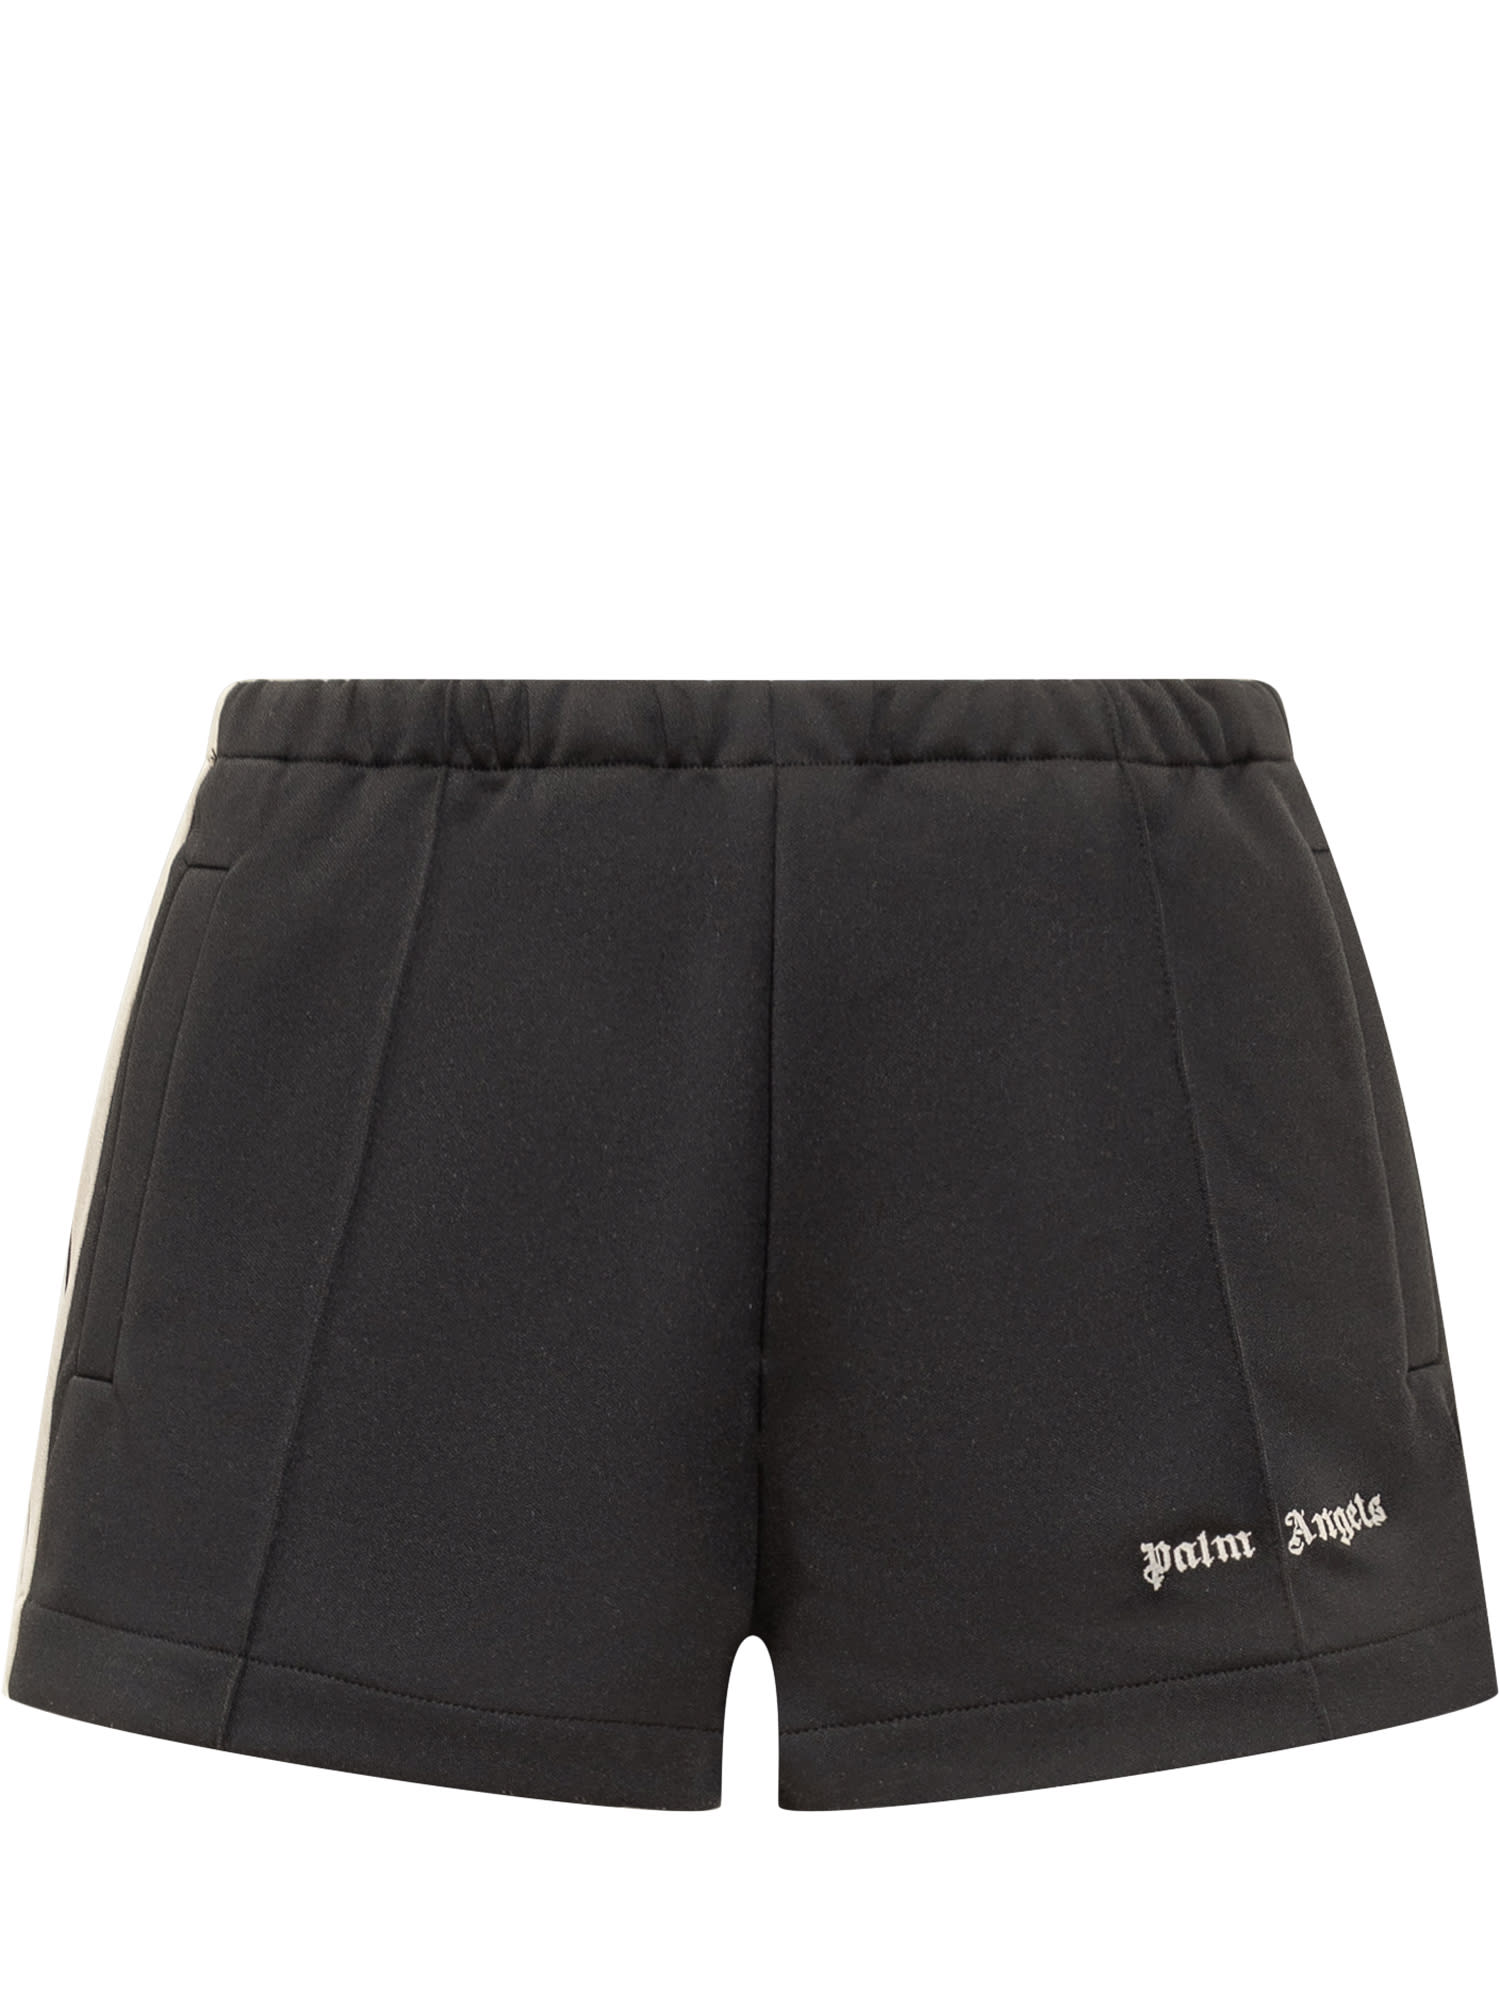 Black Polyester Sporty Shorts